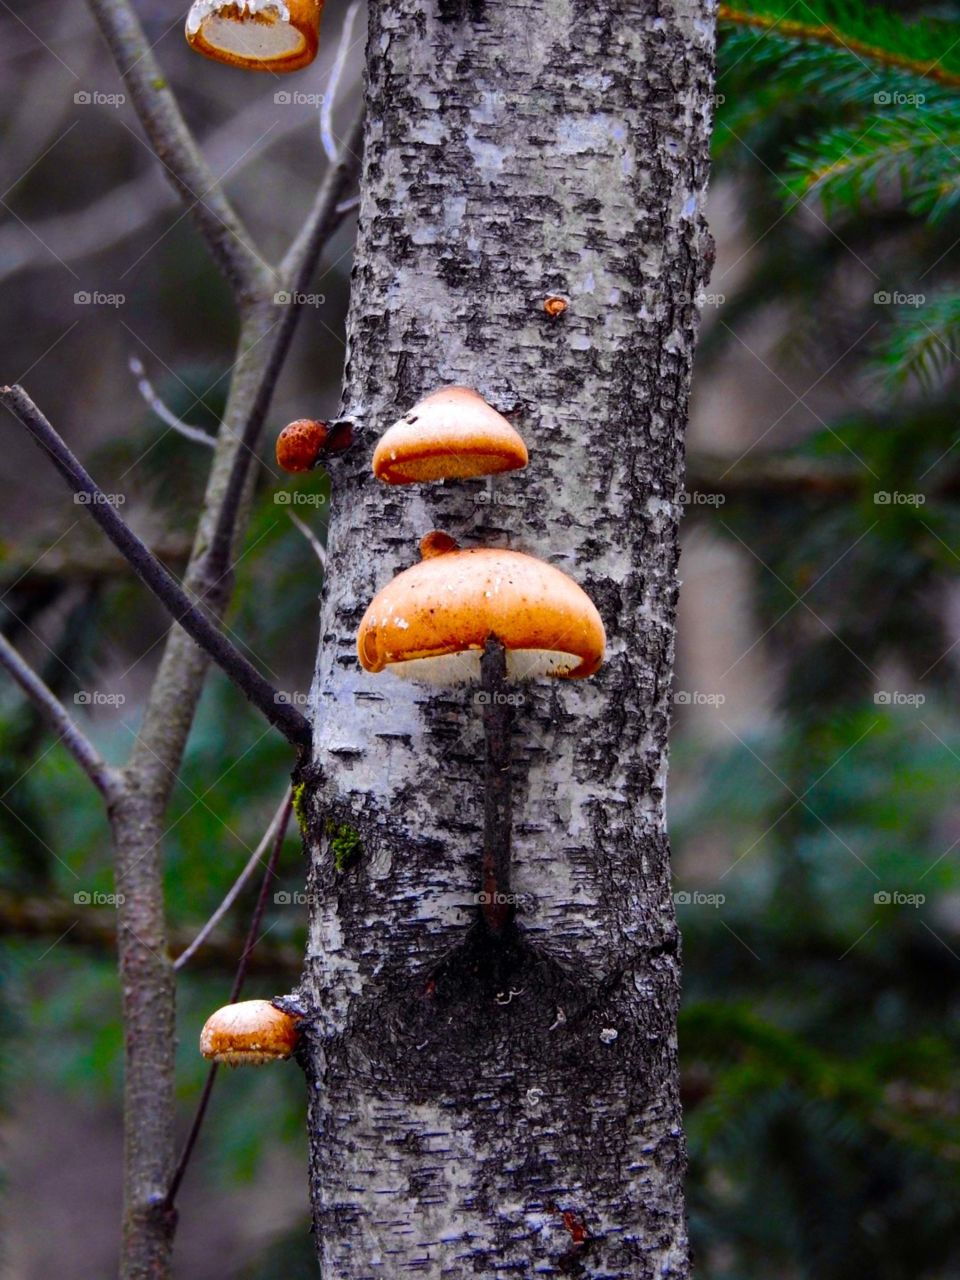 1-Up Mushrooms 